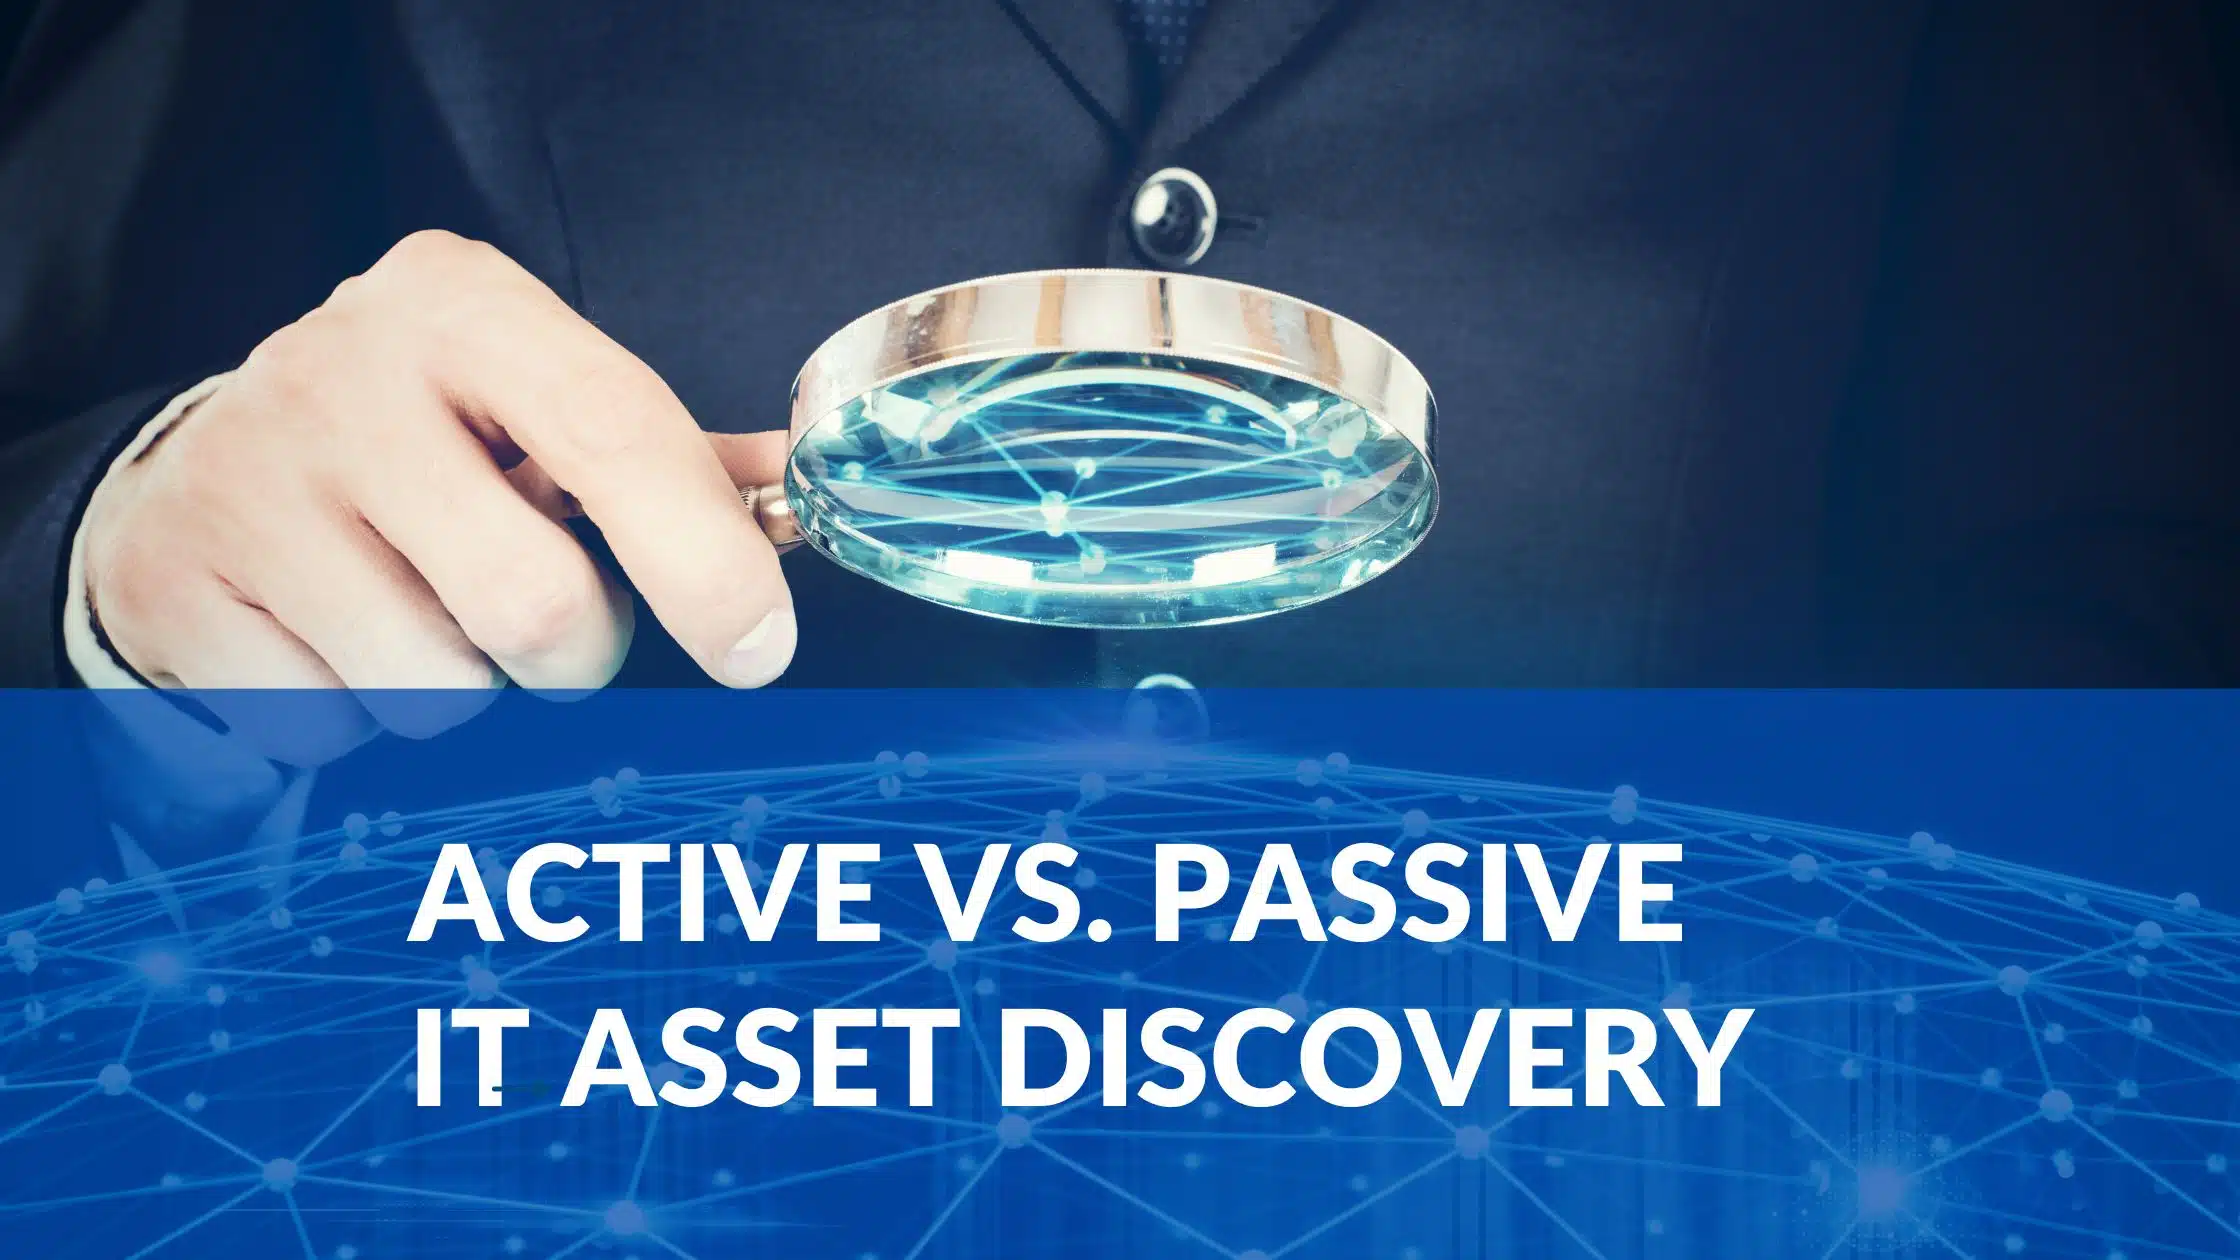 Active vs. passive it asset discovery